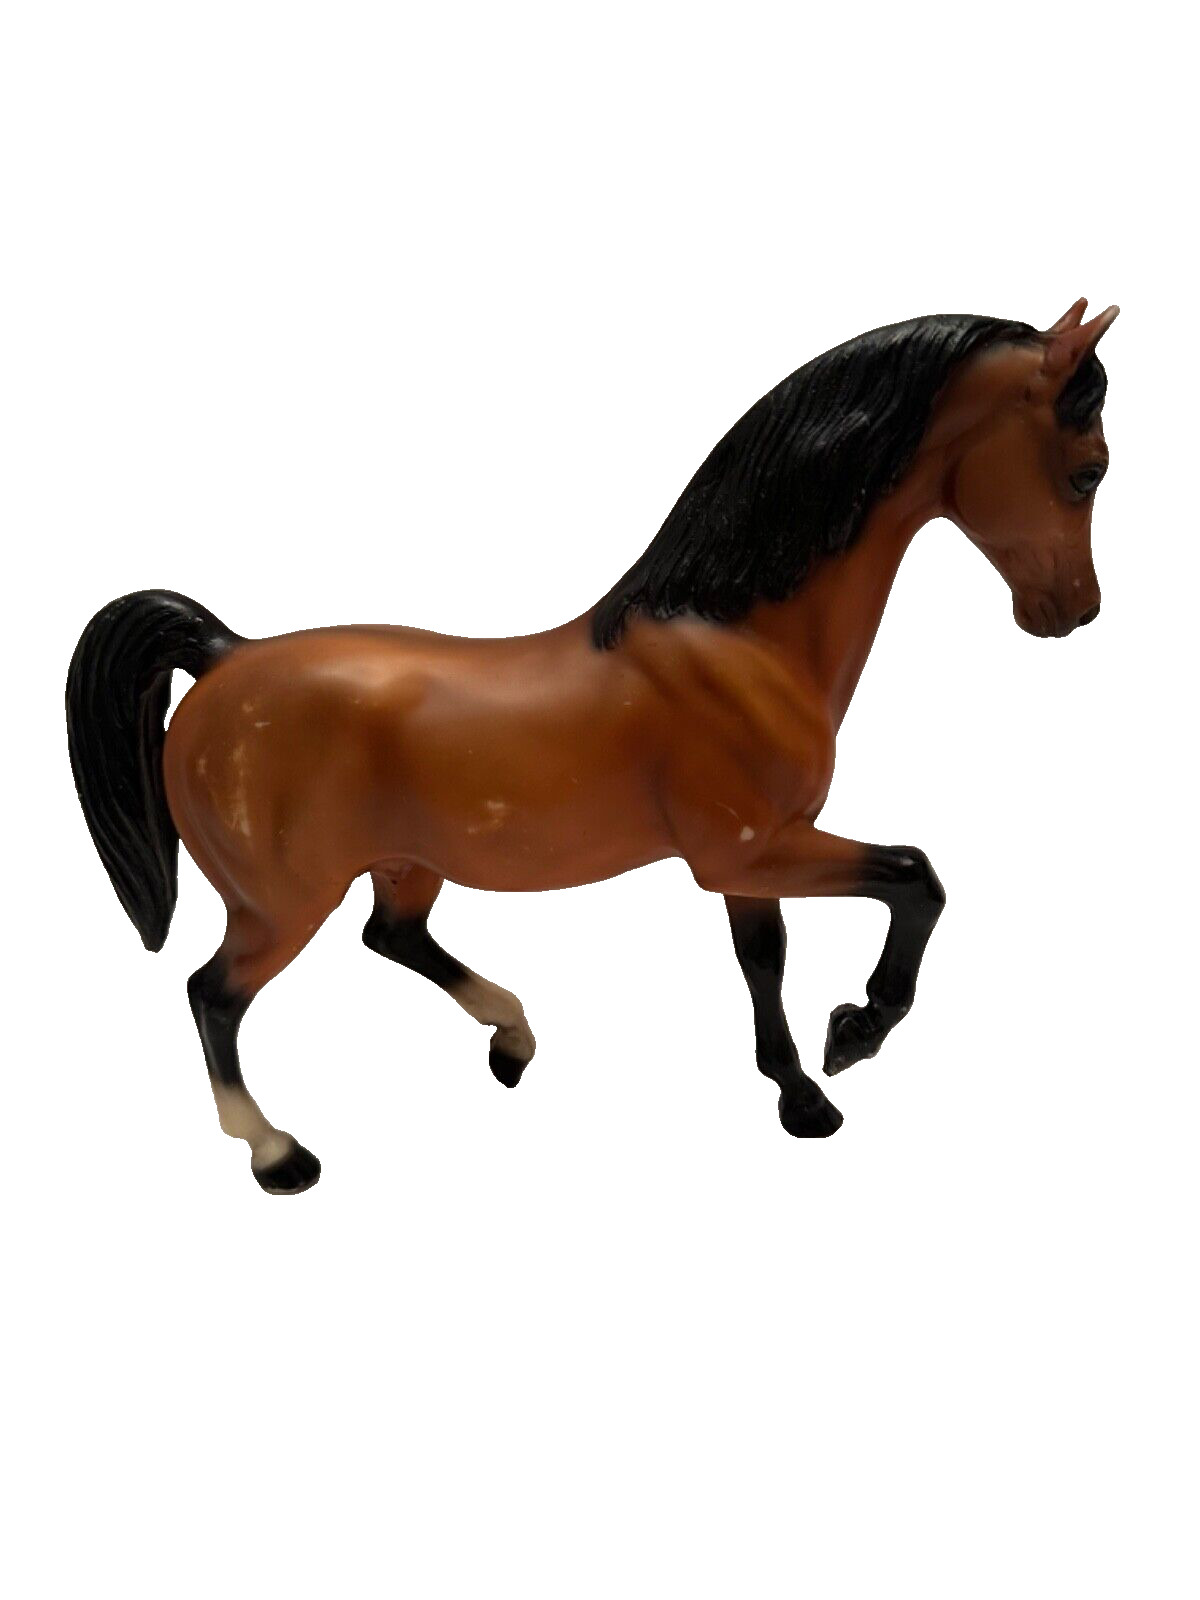 Breyer Traditional Horse Running Mare Vintage Brown Black *SEE DETAILS* Fun